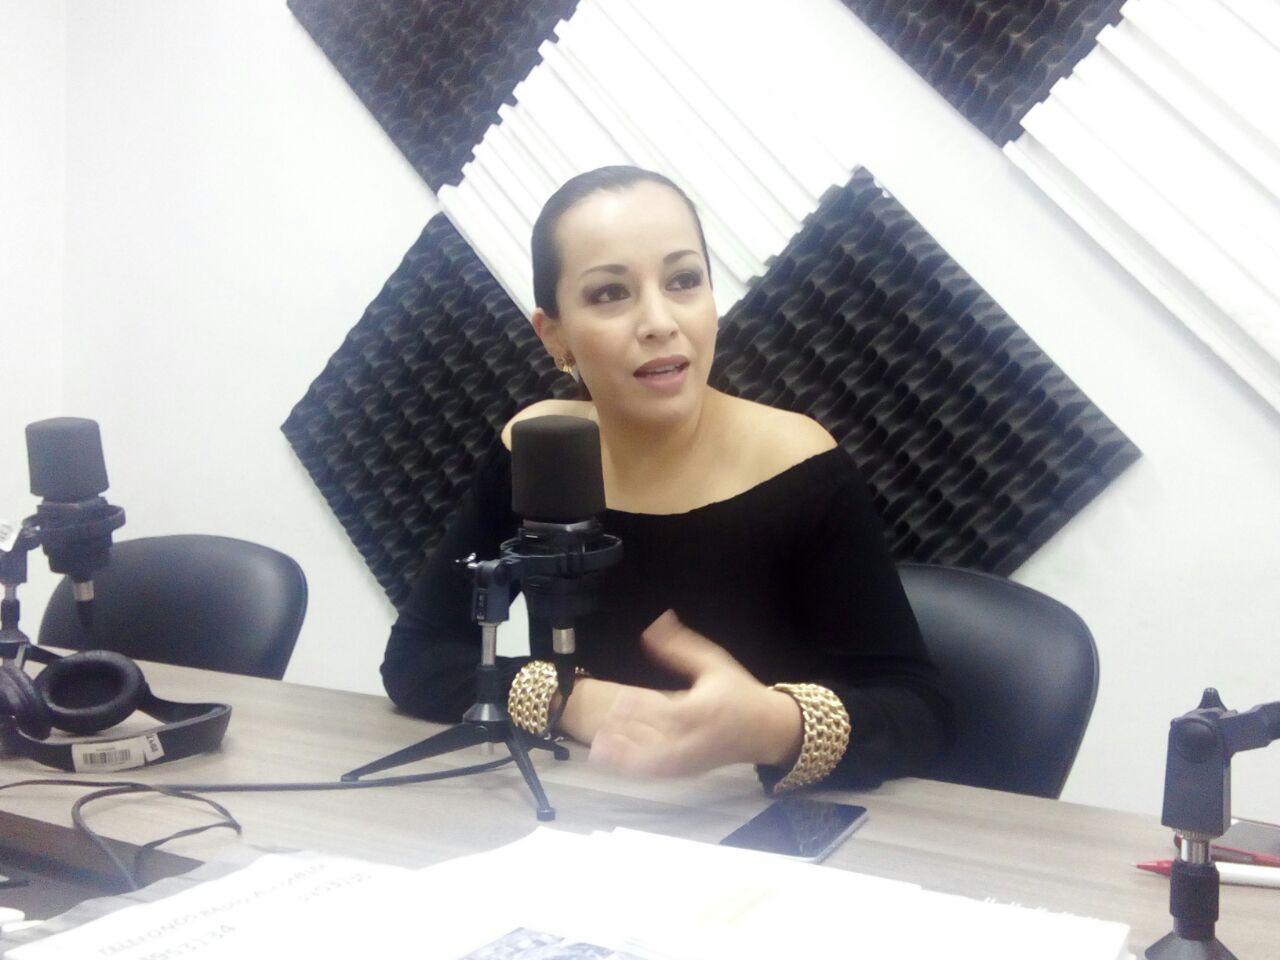 Charlas Legislativas - Verónica Arias: Agenda legislativa